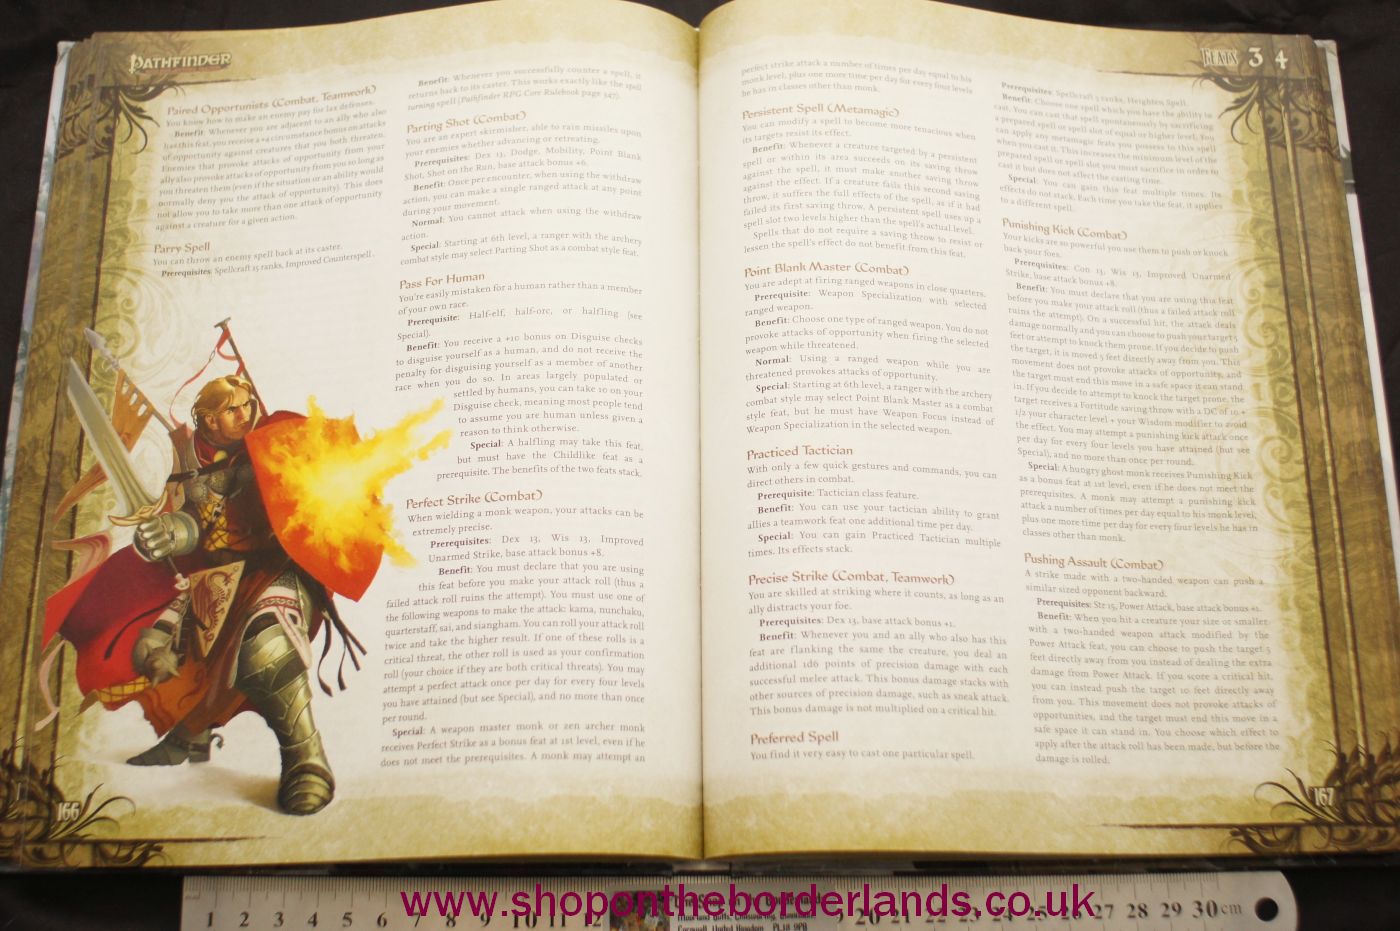 pathfinder alchemy manual pdf free